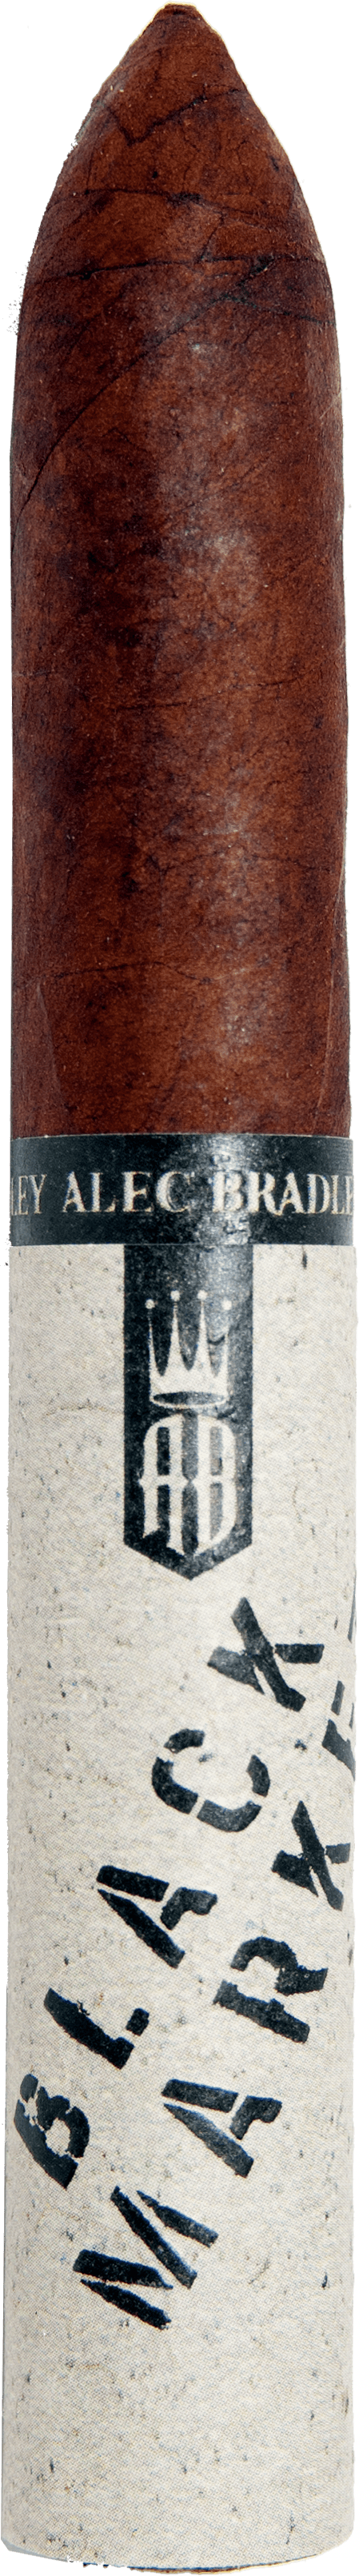 Alec Bradley Black Market Torpedo Zigarre